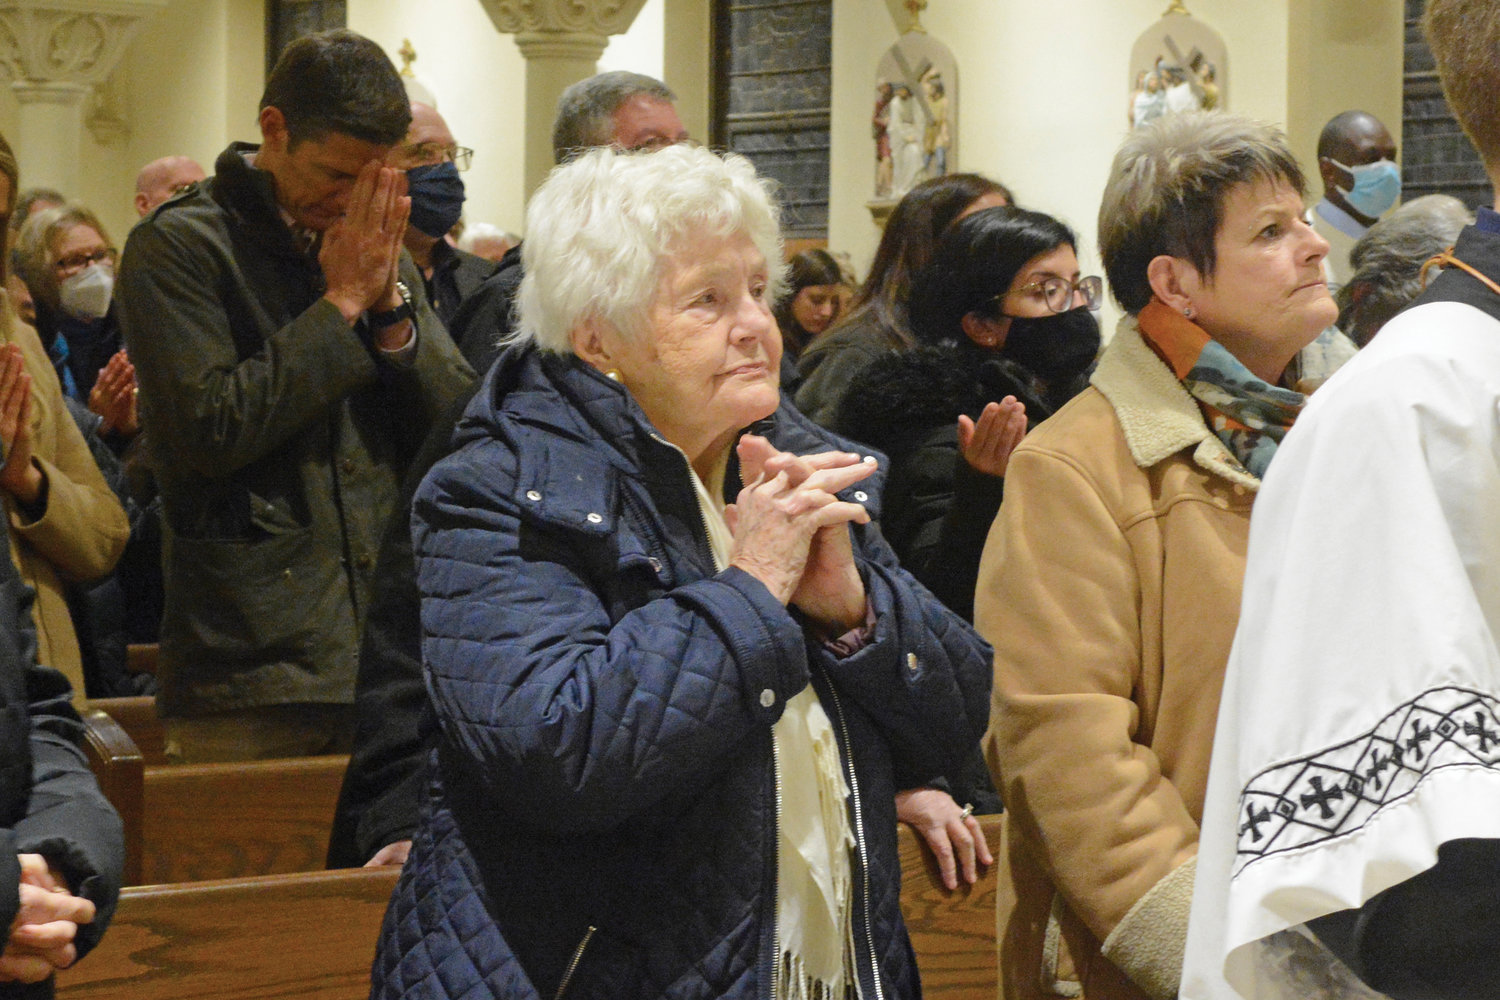 Parishioners join in prayer.